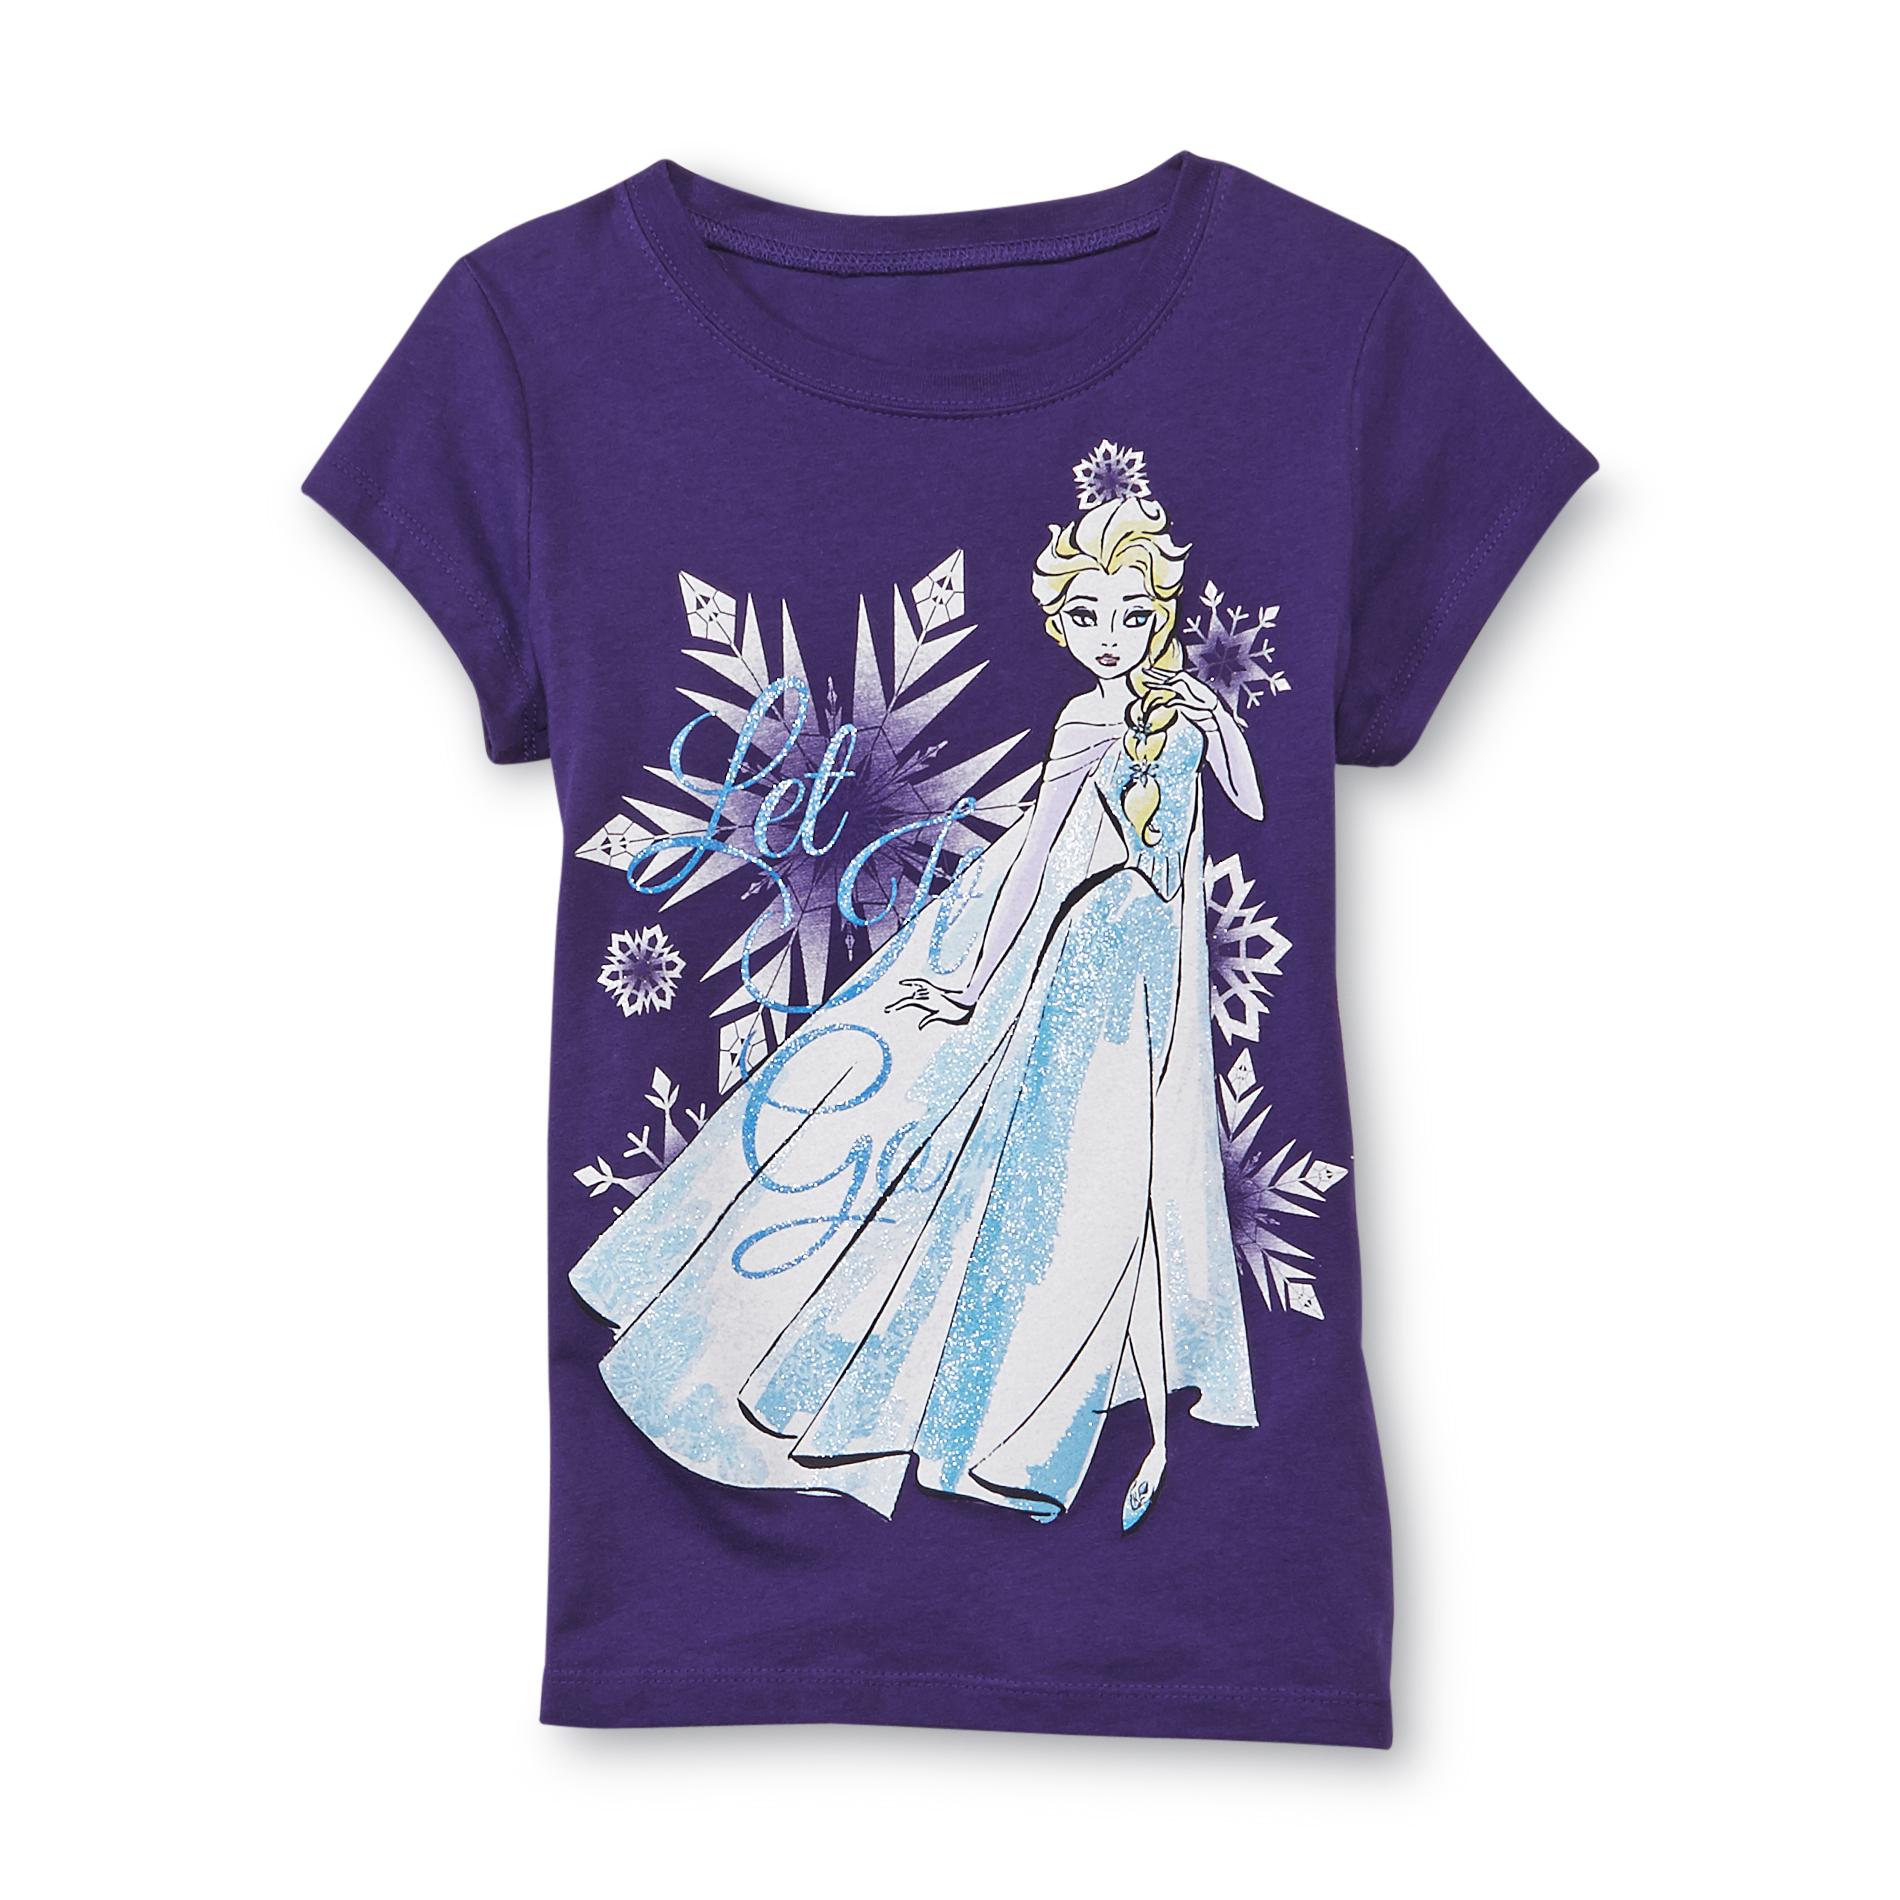 Disney Frozen Girl's Graphic T-Shirt - Let It Go